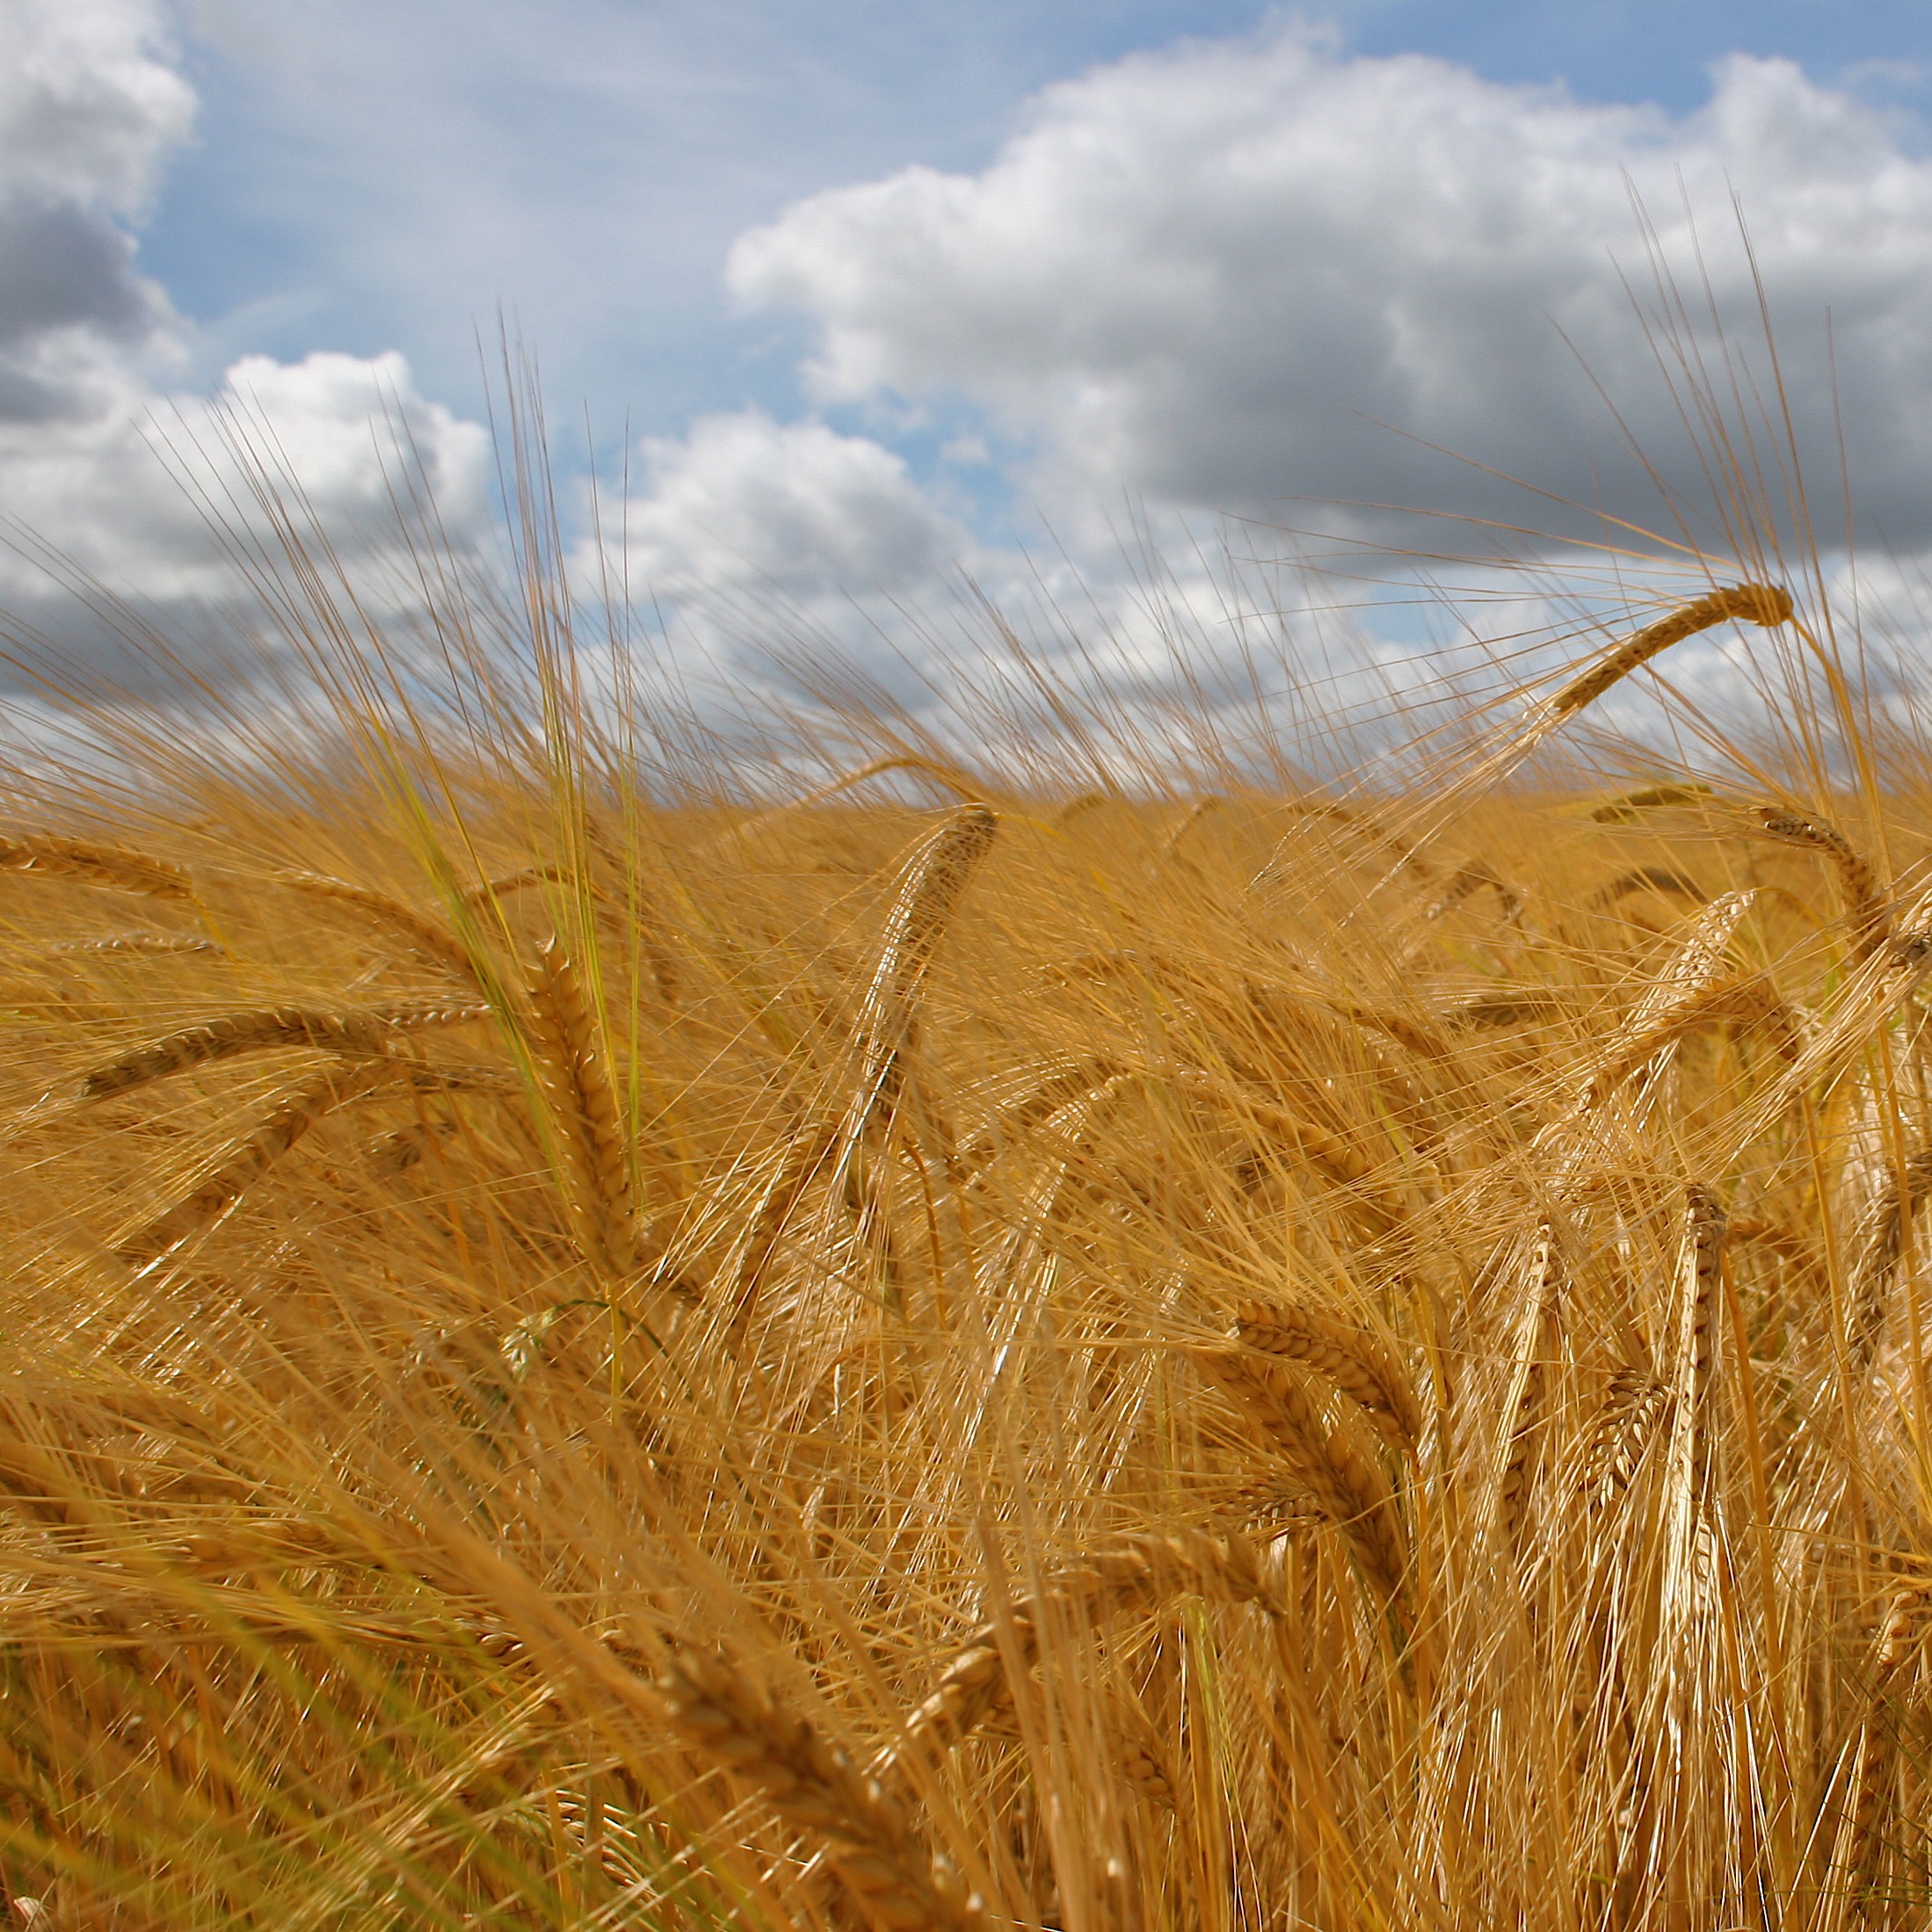 Kedoshim: “Chadash” – Prohibition on Eating New Grain Crop